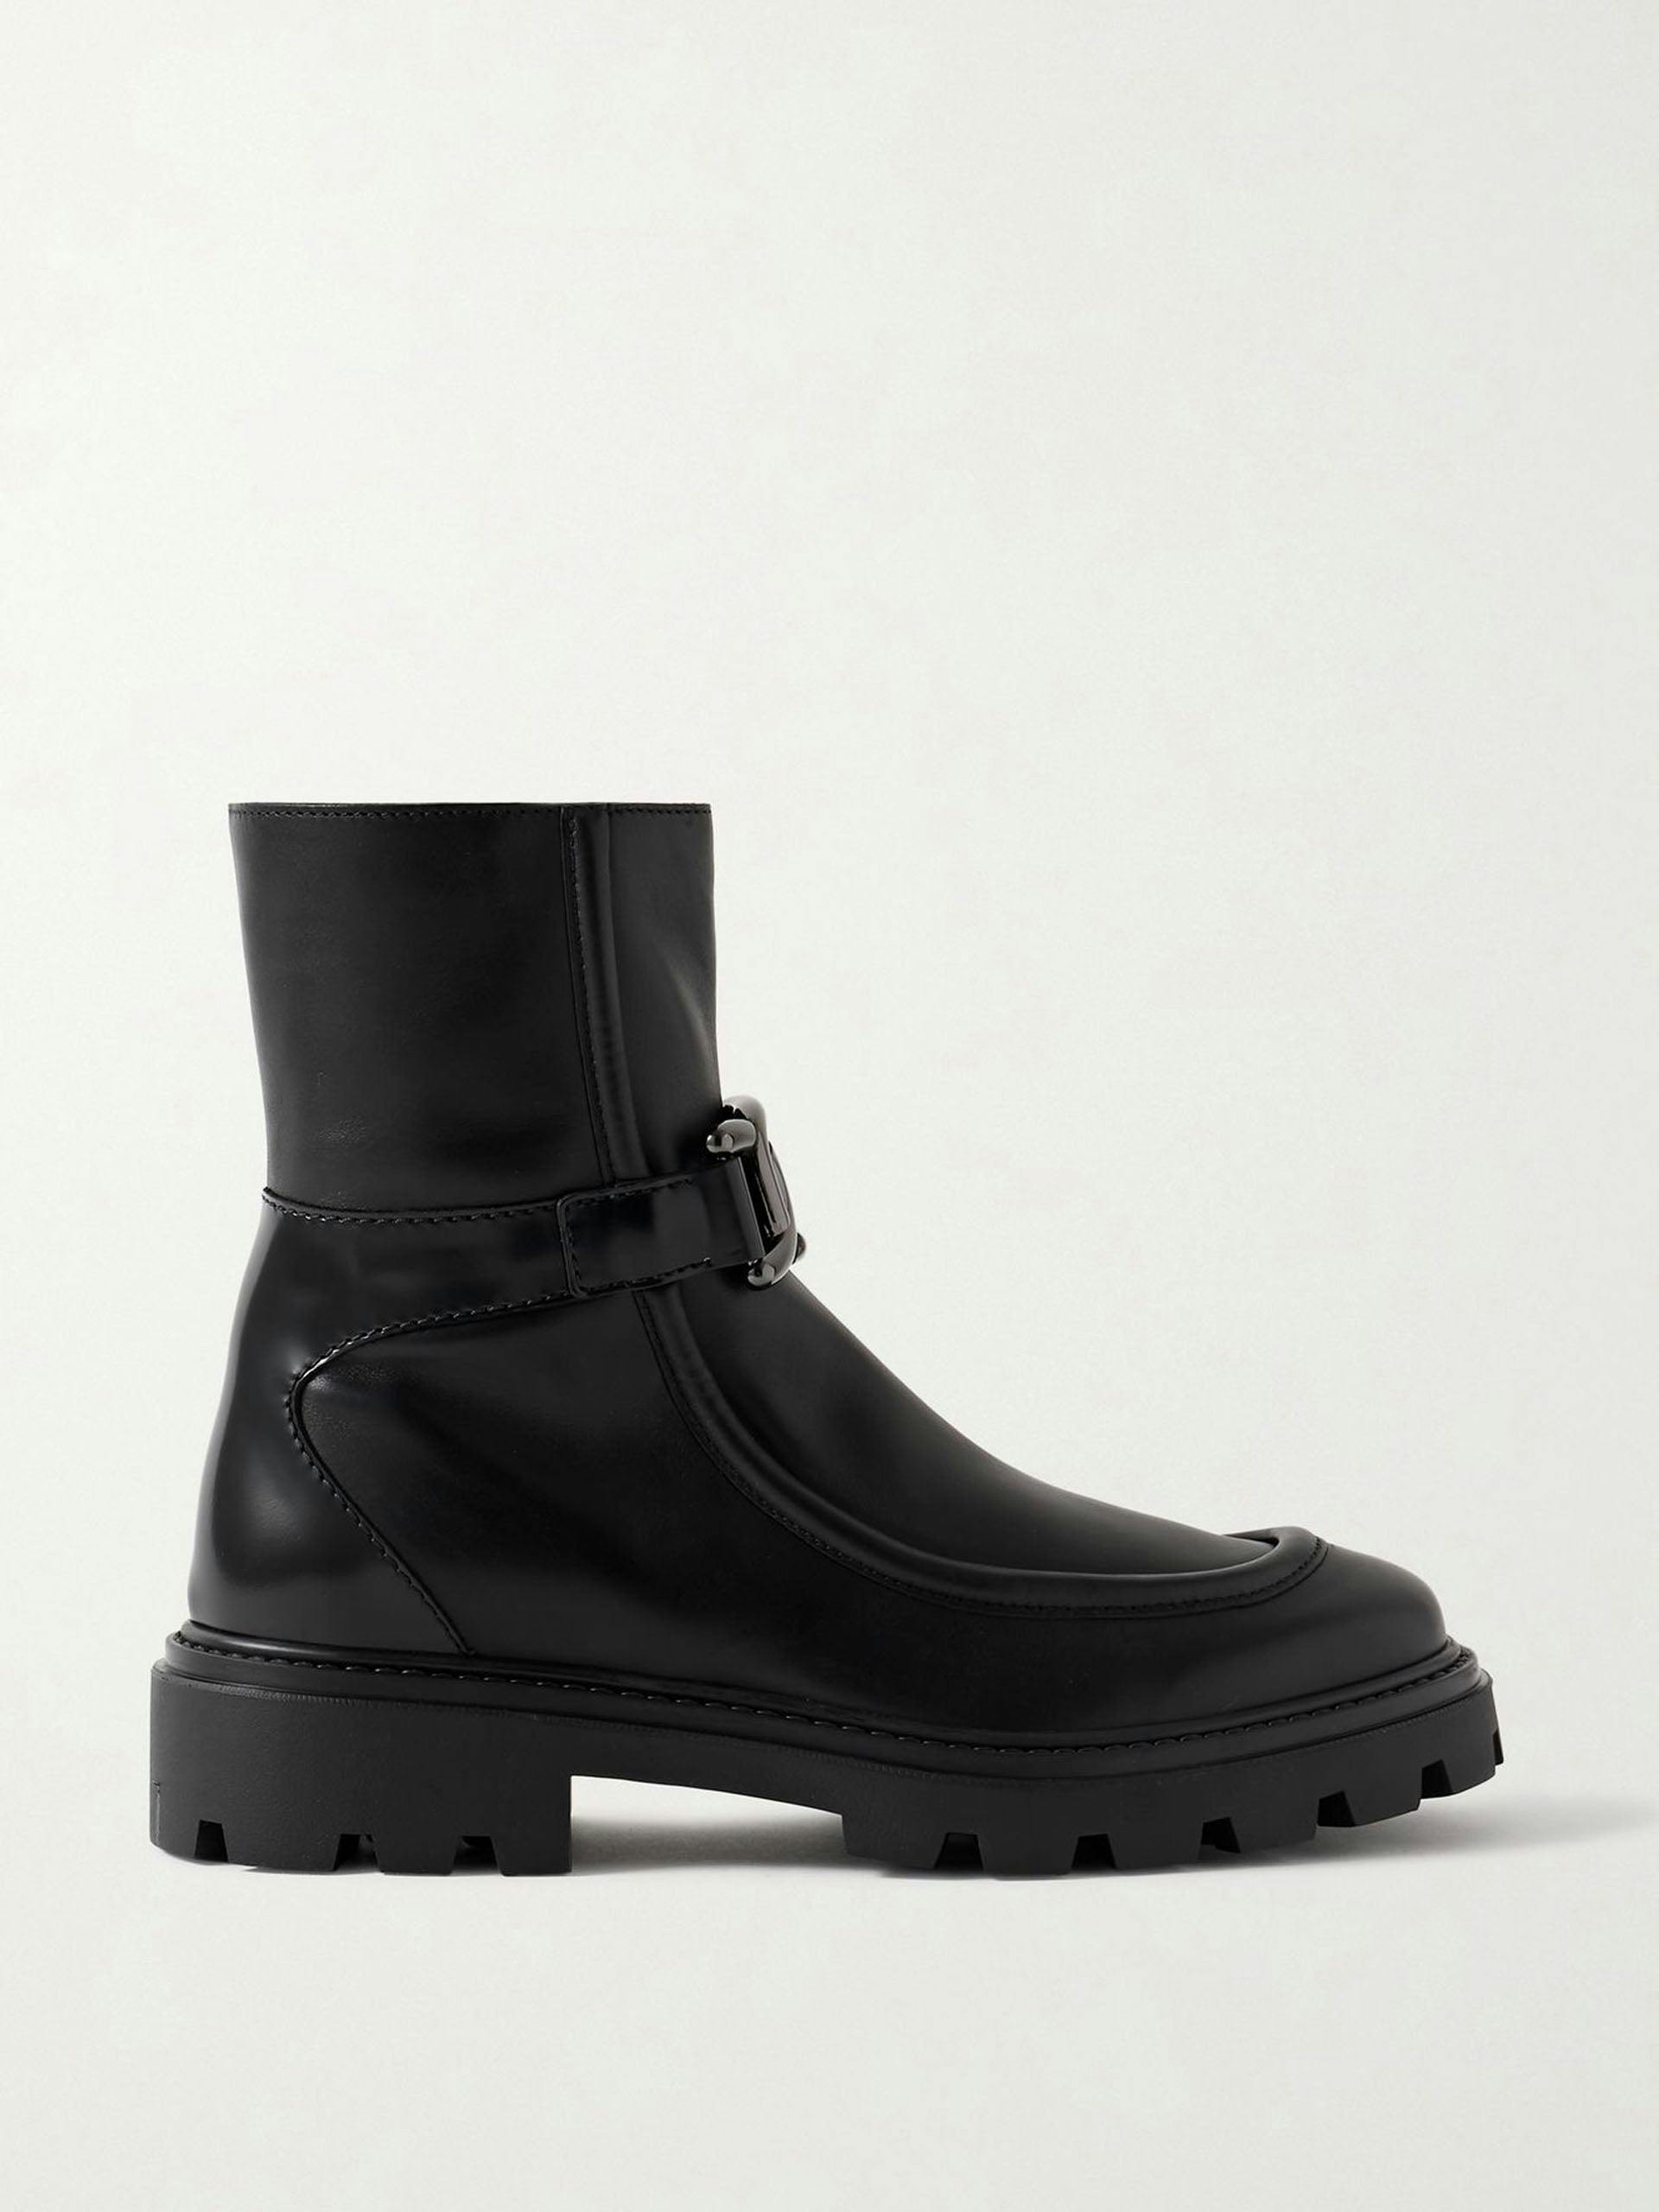 Black embellished leather ankle boots